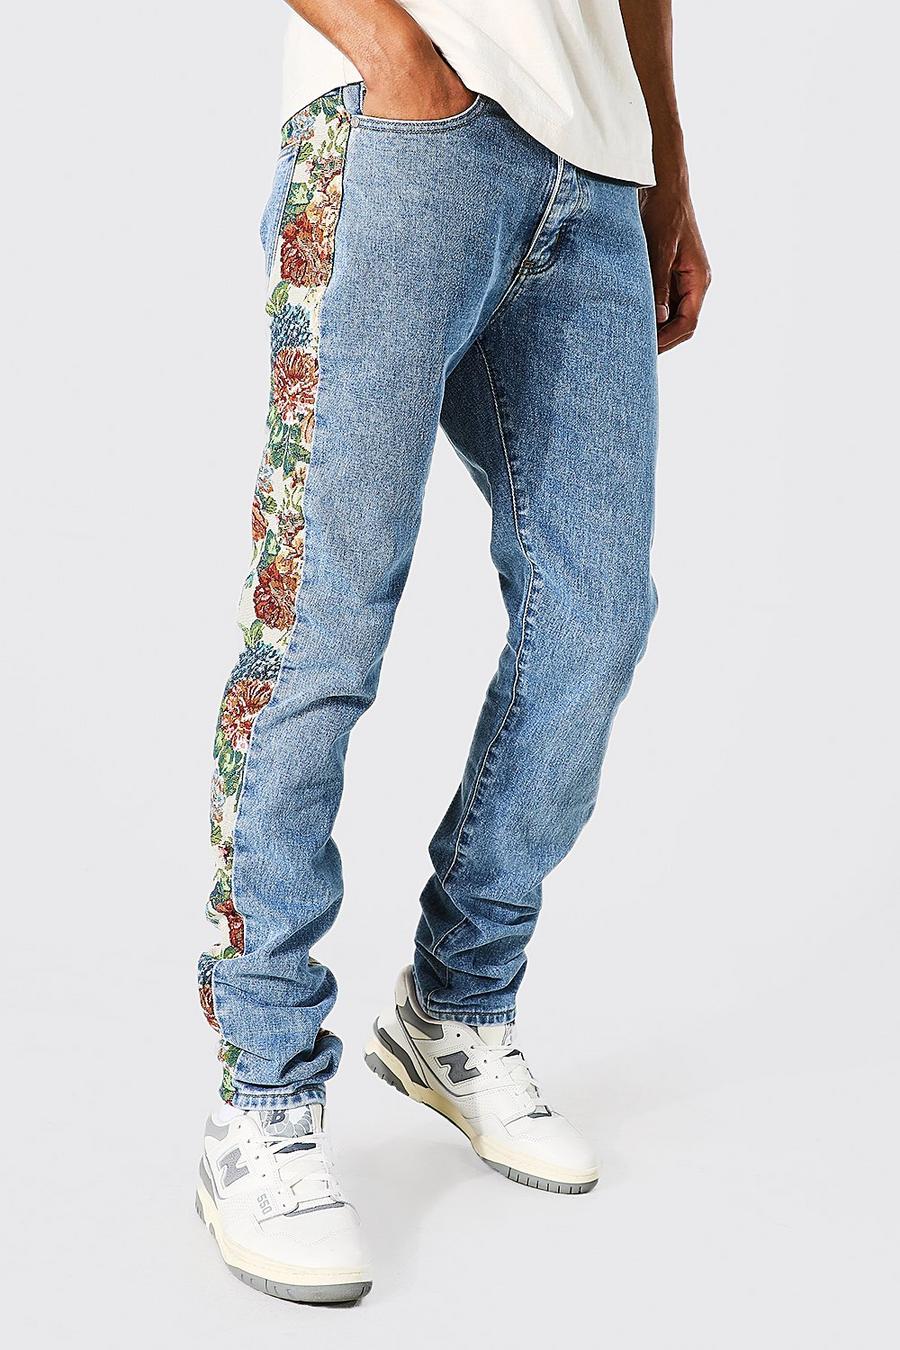 Jeans Tall Skinny Fit in denim rigido con pannelli stile arazzo, Mid blue azul image number 1